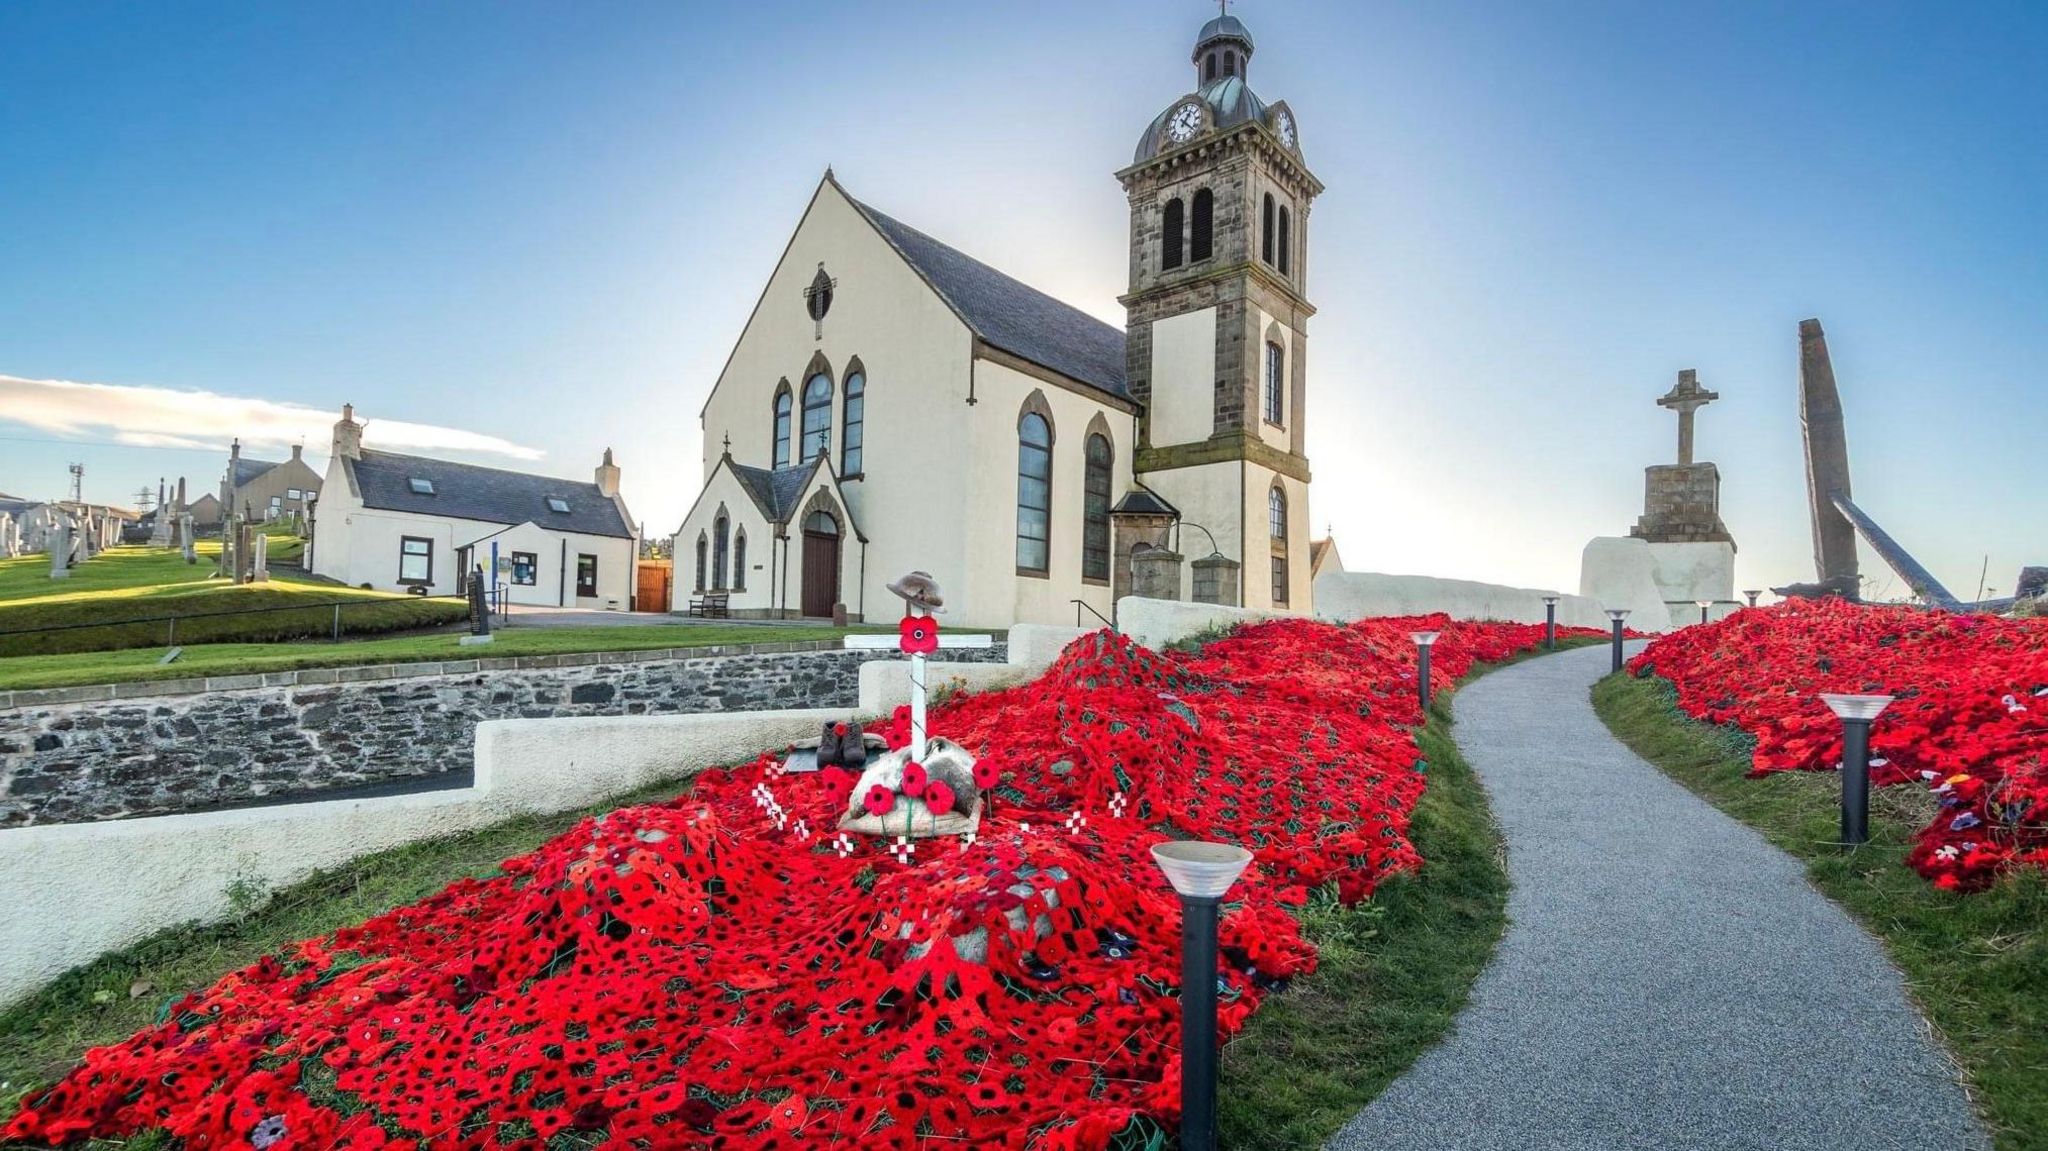 Macduff Parish Church poppy display wider shot with path